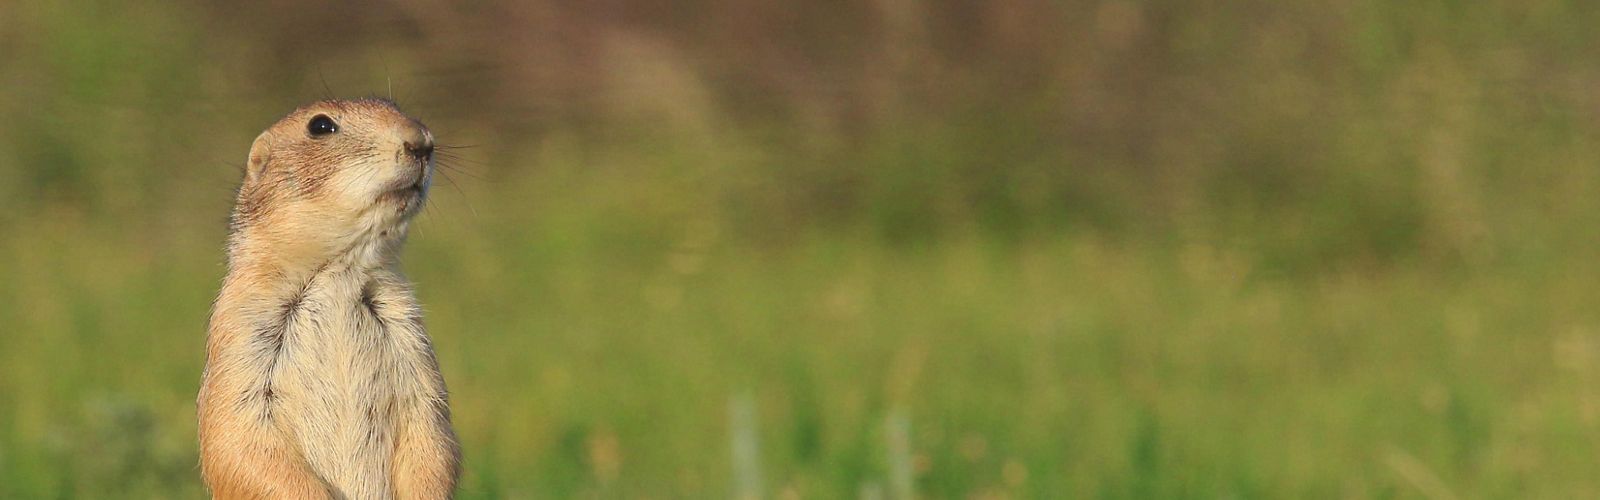 Black-tailed prairie dog peeking out